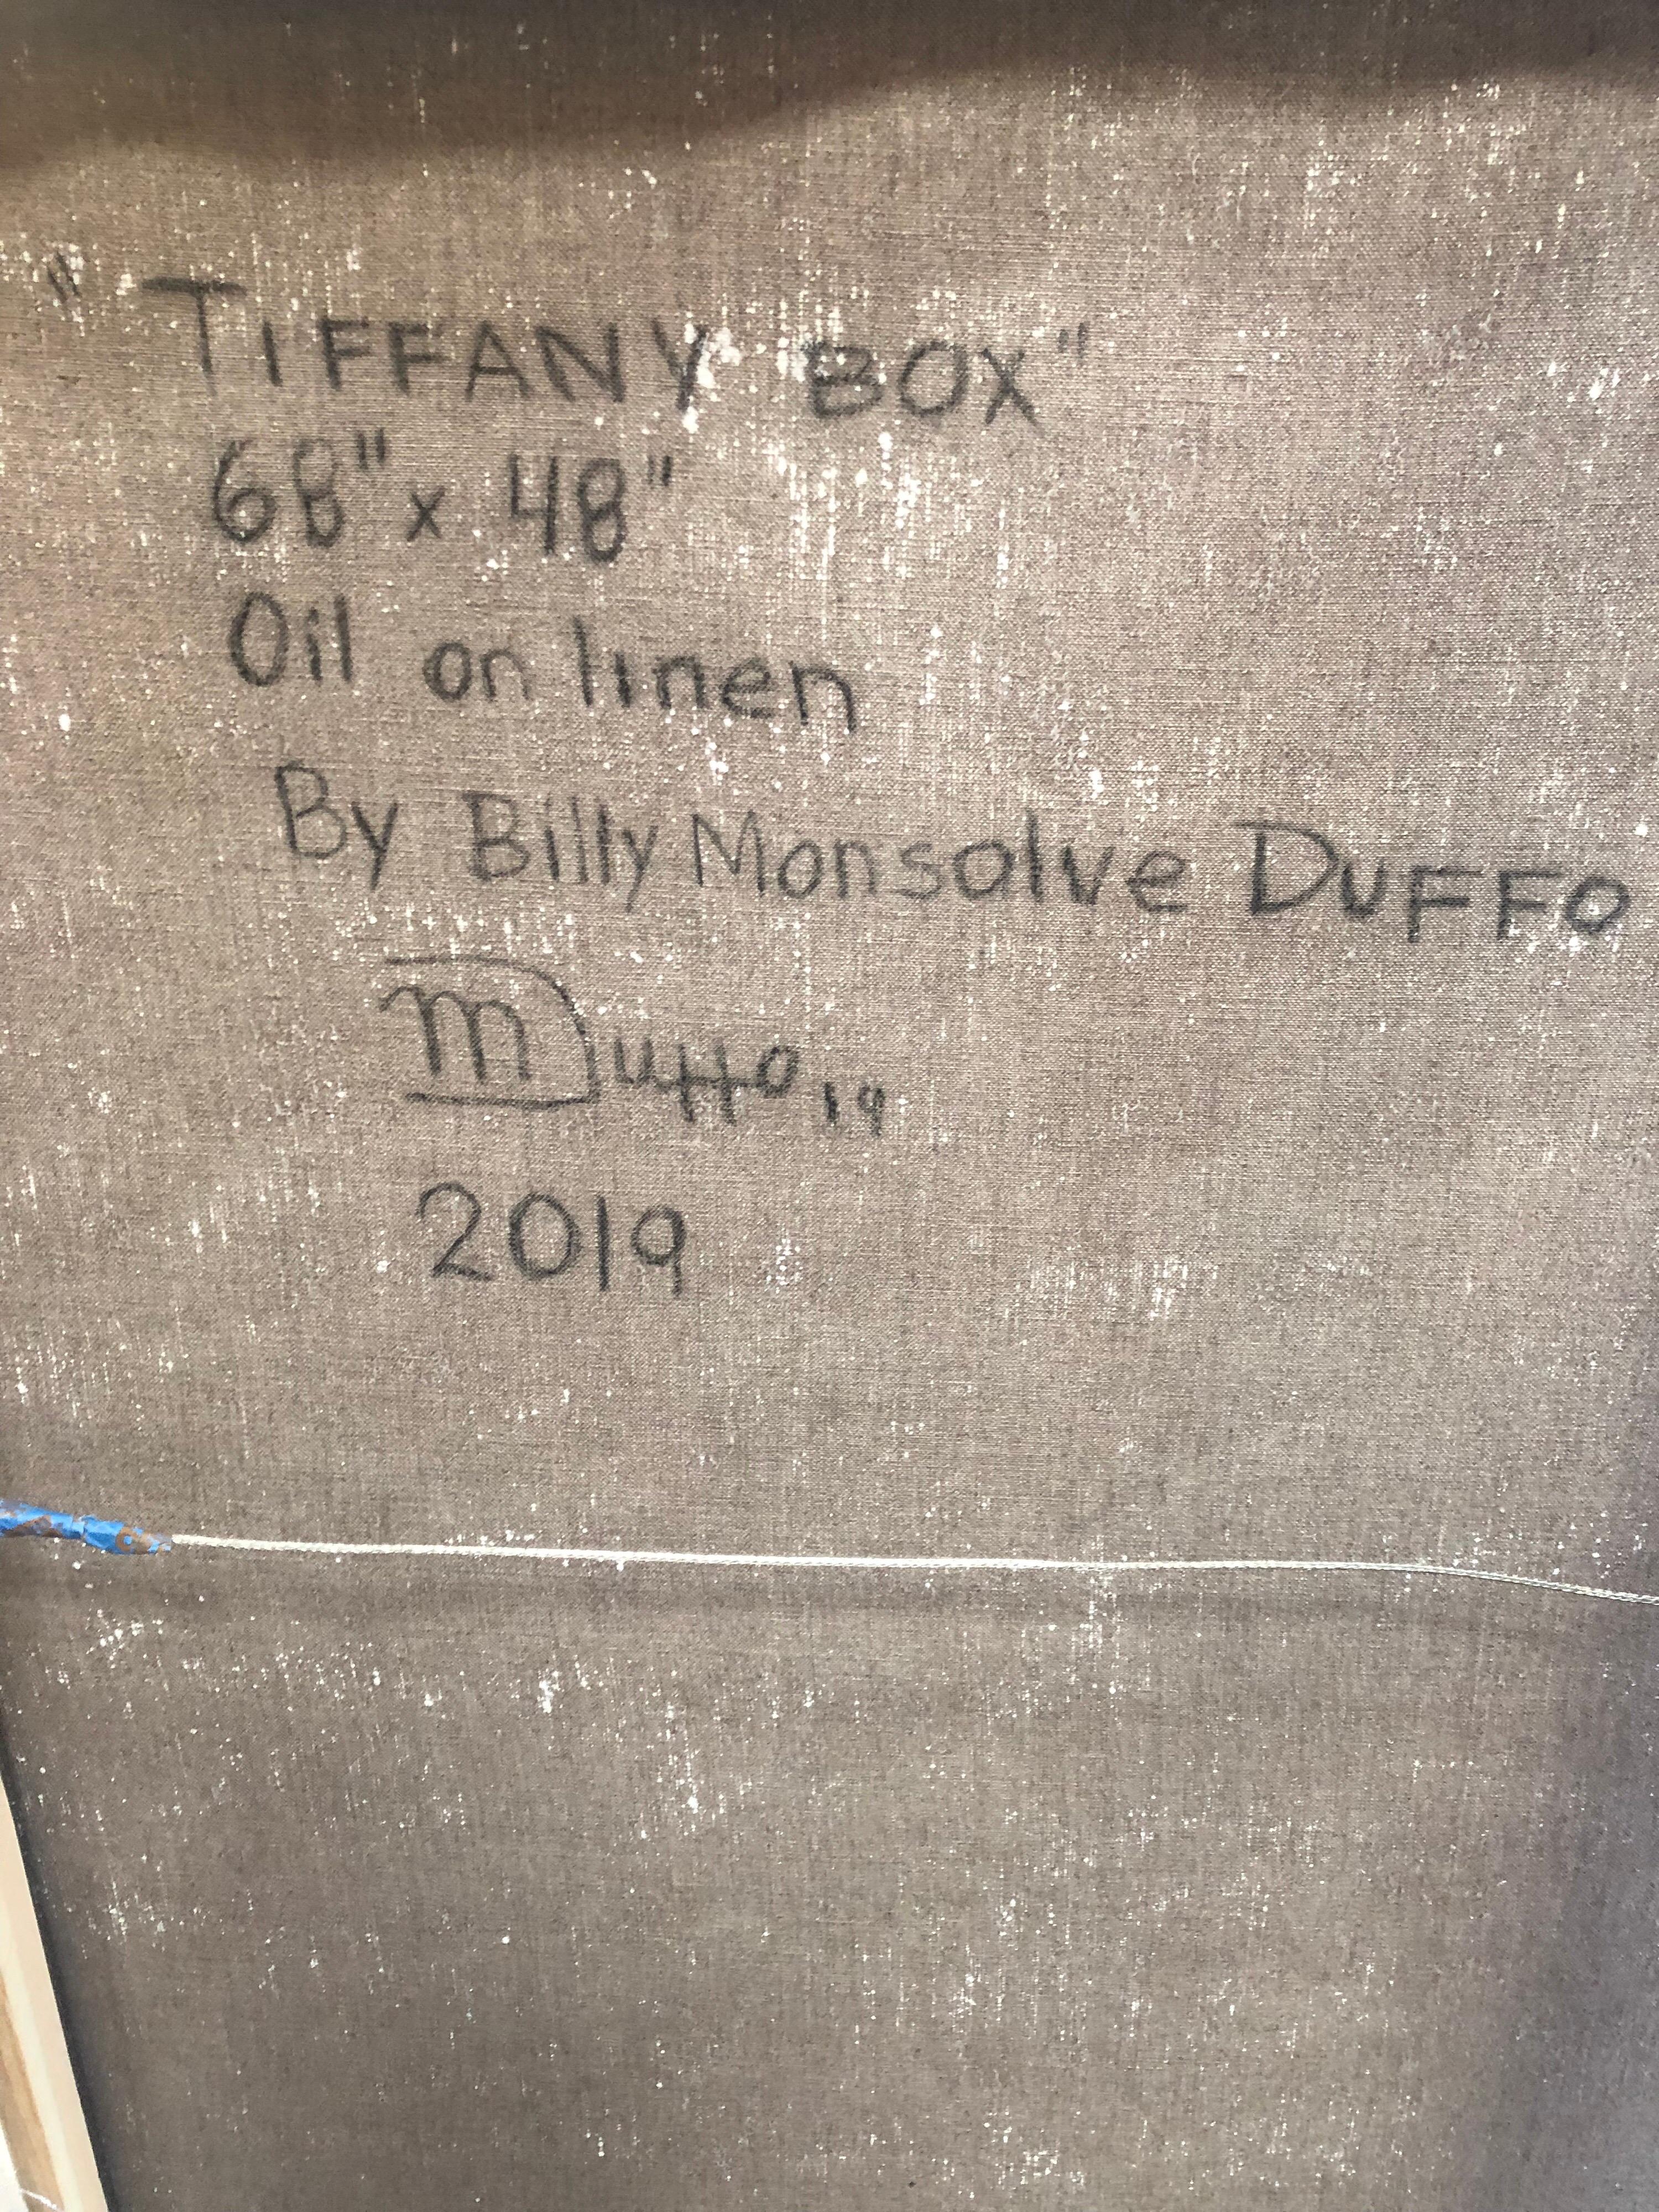 Tiffany Box by Billy Monsalve Duffo 1